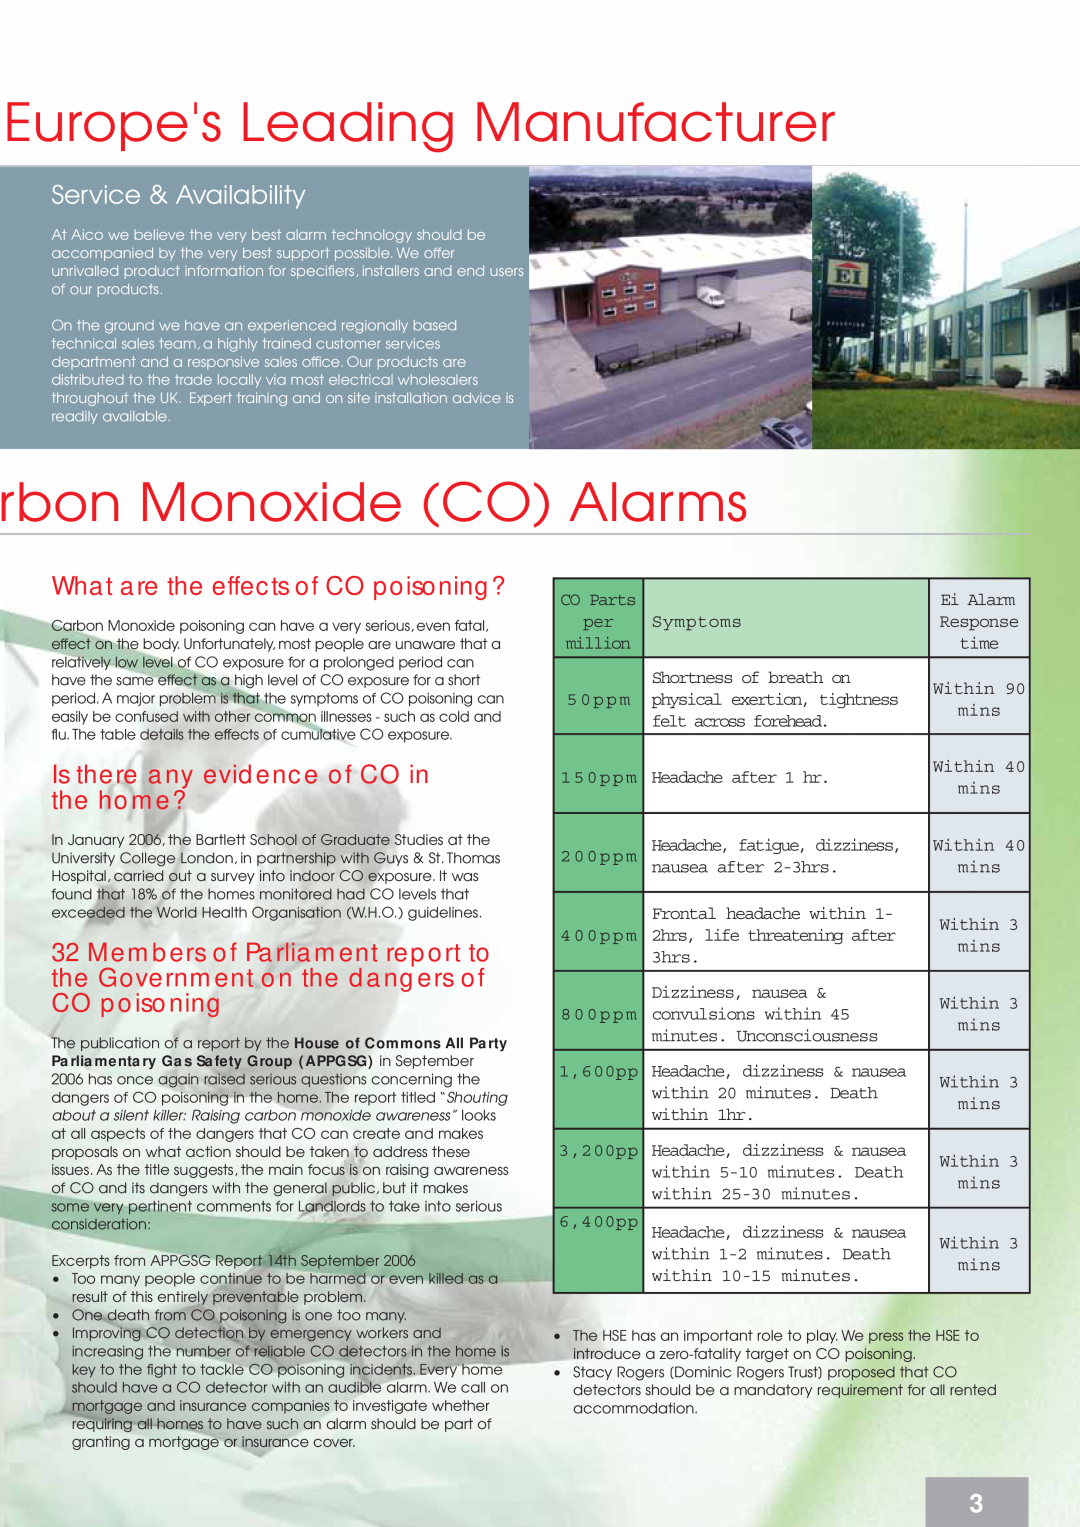 Aico 260 Series manual Europes Leading Manufacturer, rbon Monoxide CO Alarms, Service & Availability 